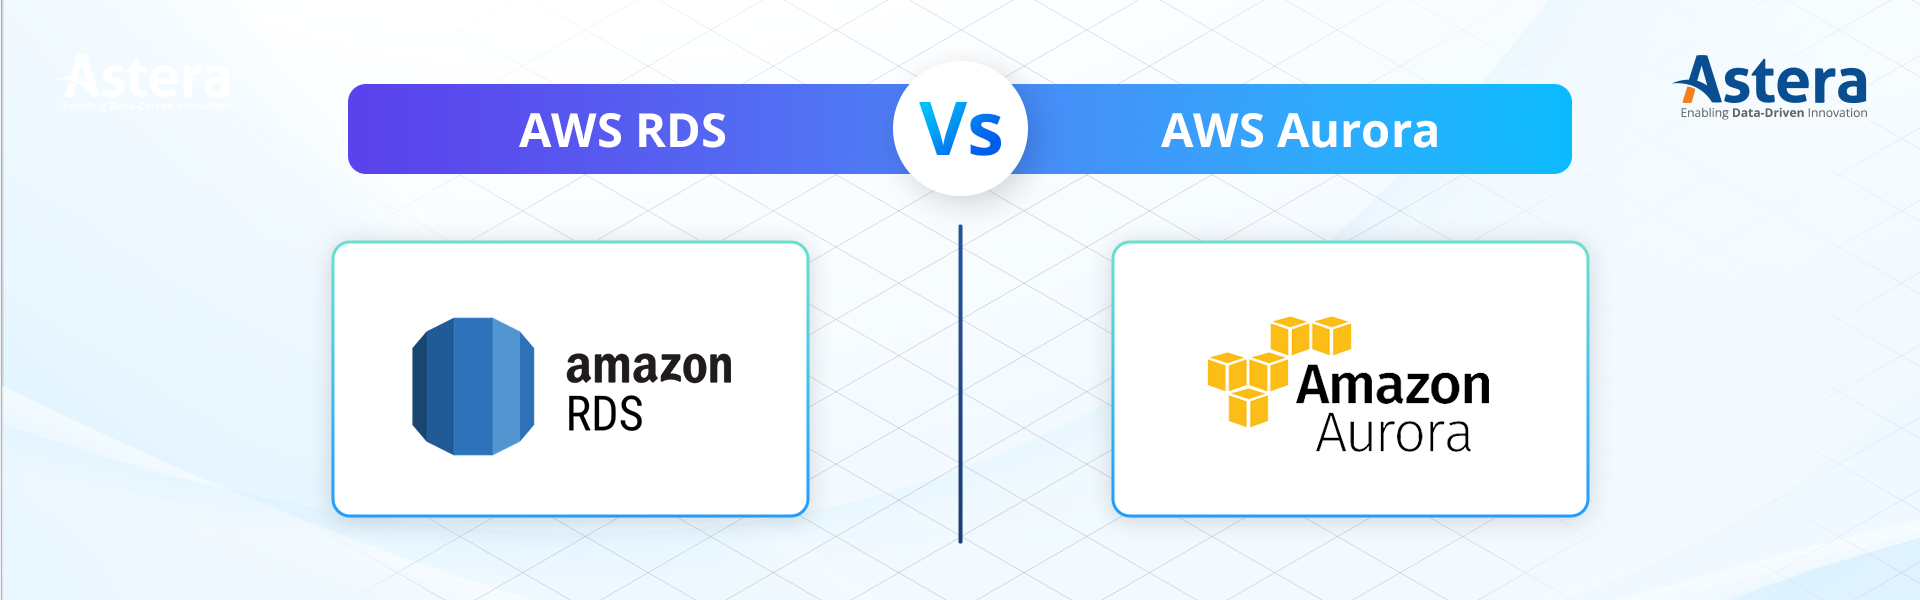 AWS RDS vs AWS Aurora